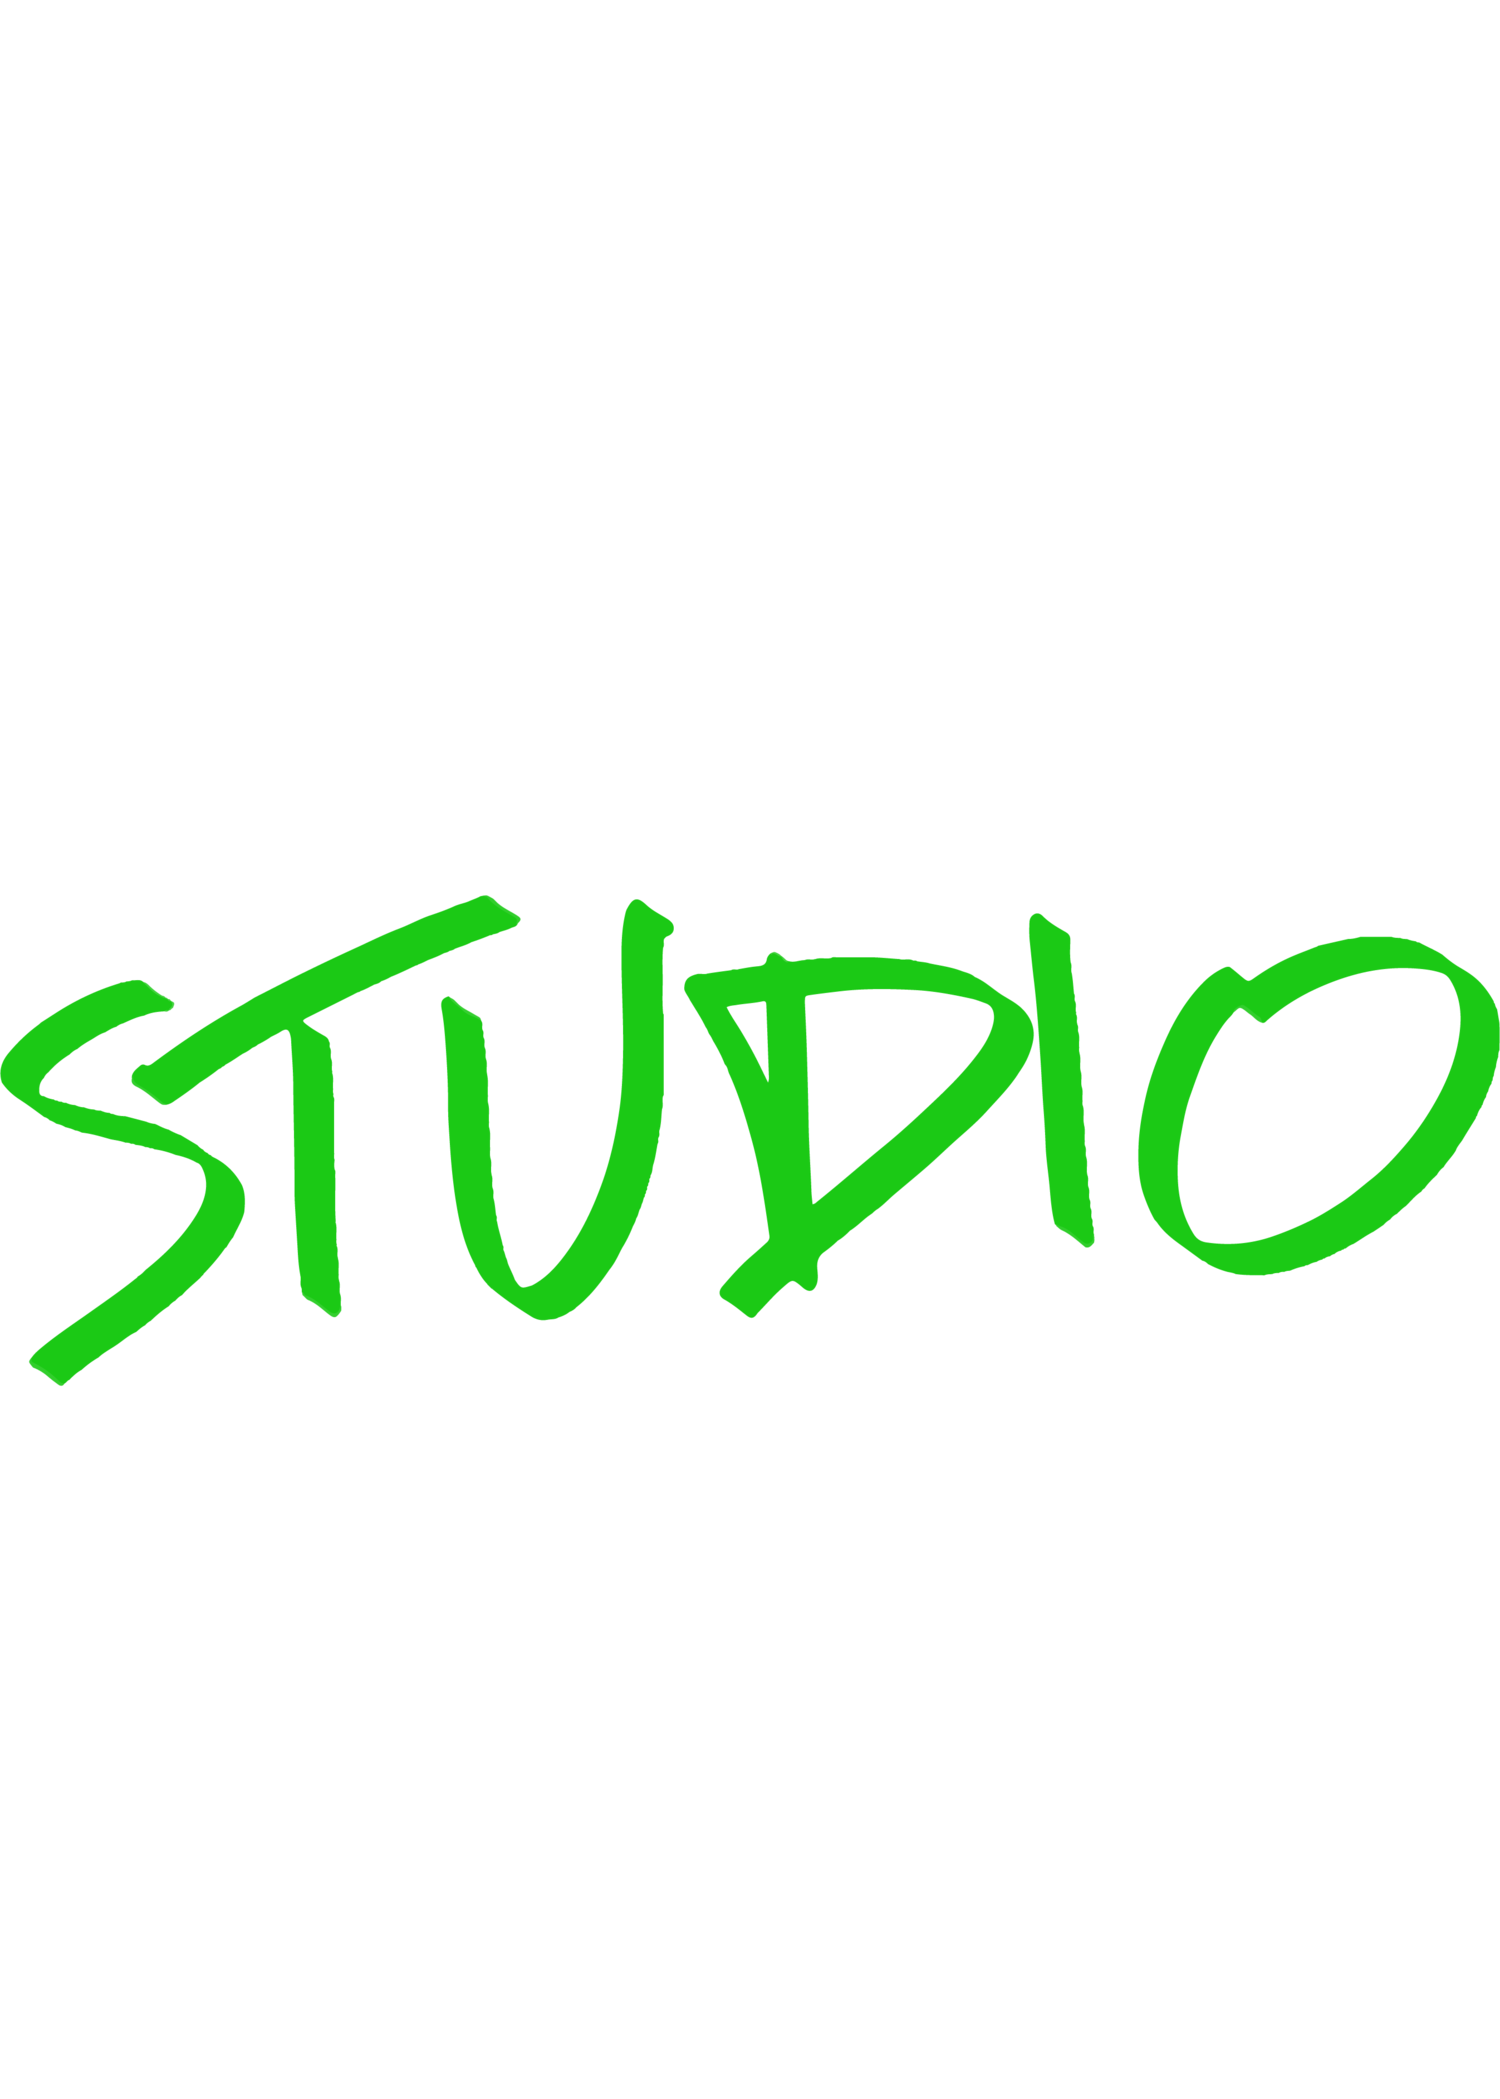 BAD KIDZ STUDIO